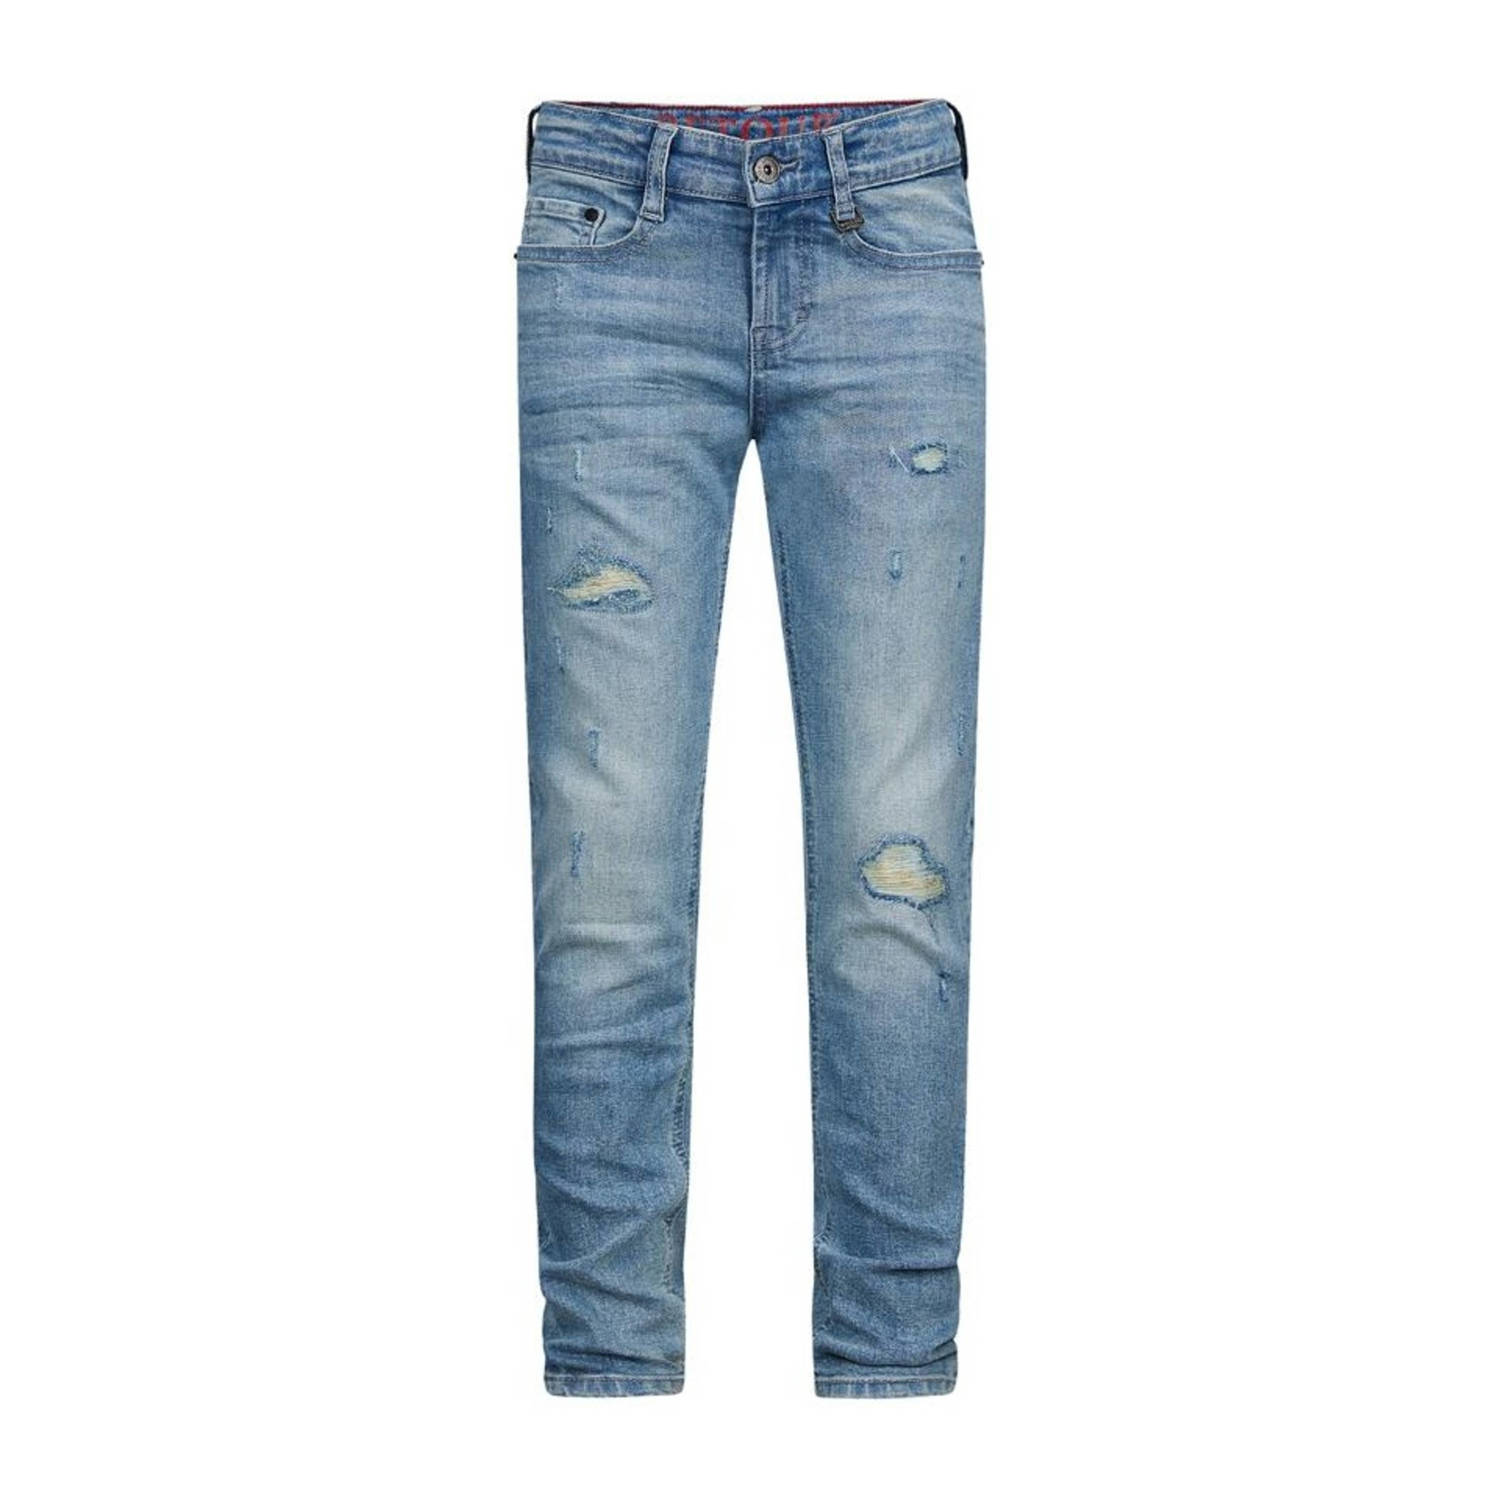 Retour Jeans tapered fit jeans Wulf Repair light blue denim Blauw Jongens Stretchdenim 122